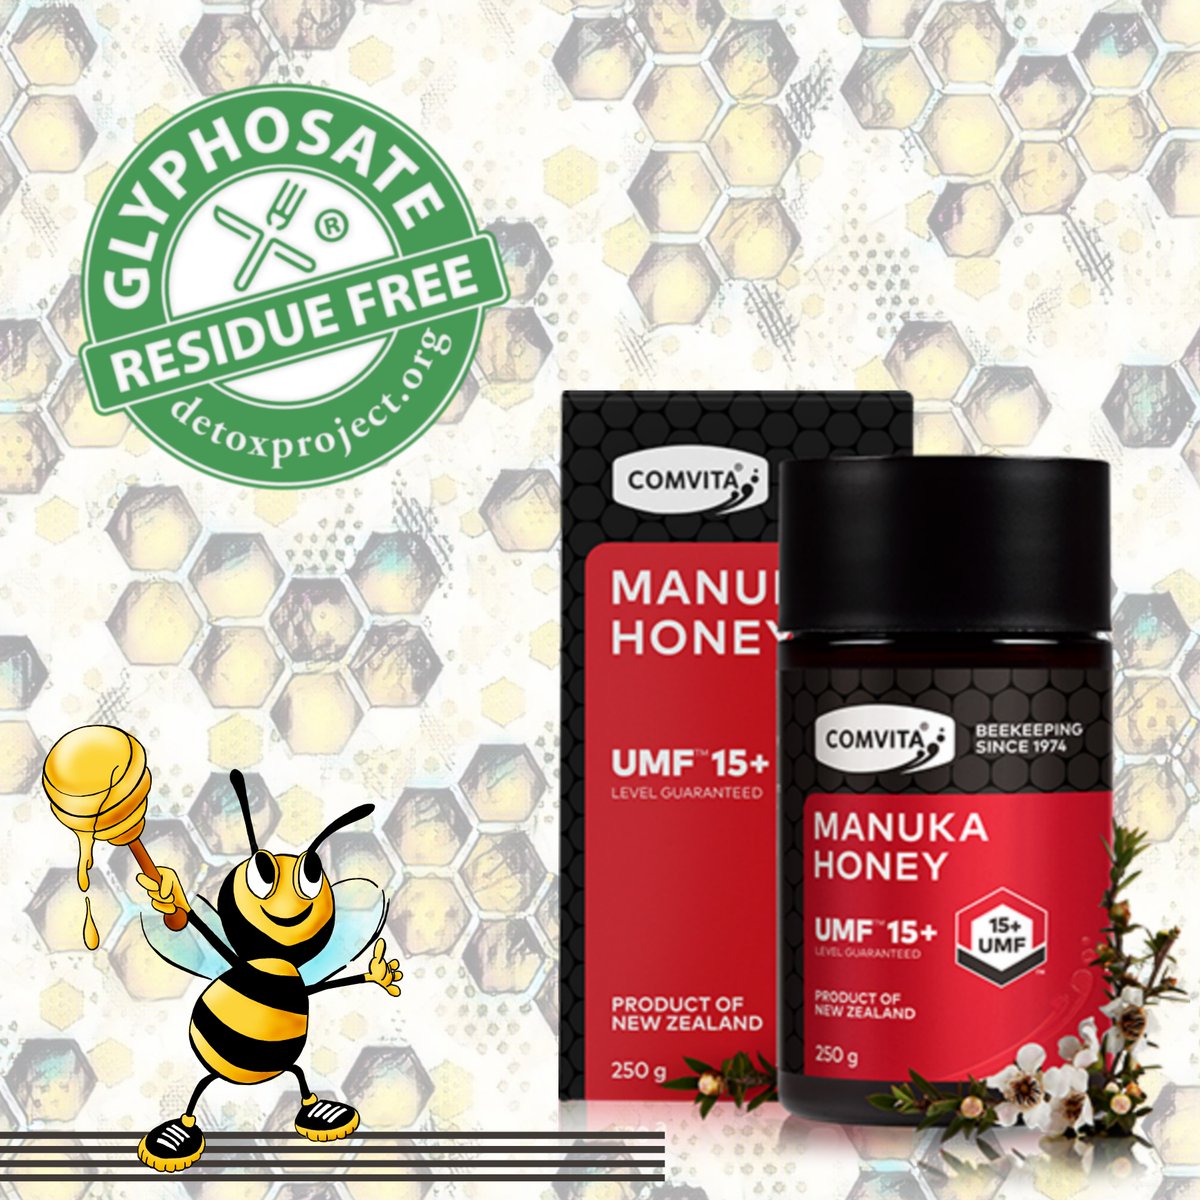 Manuka Honey brand Comvita are now Glyphosate Residue Free certified - welcome on board! #Comvita #glyphosateresiduefree